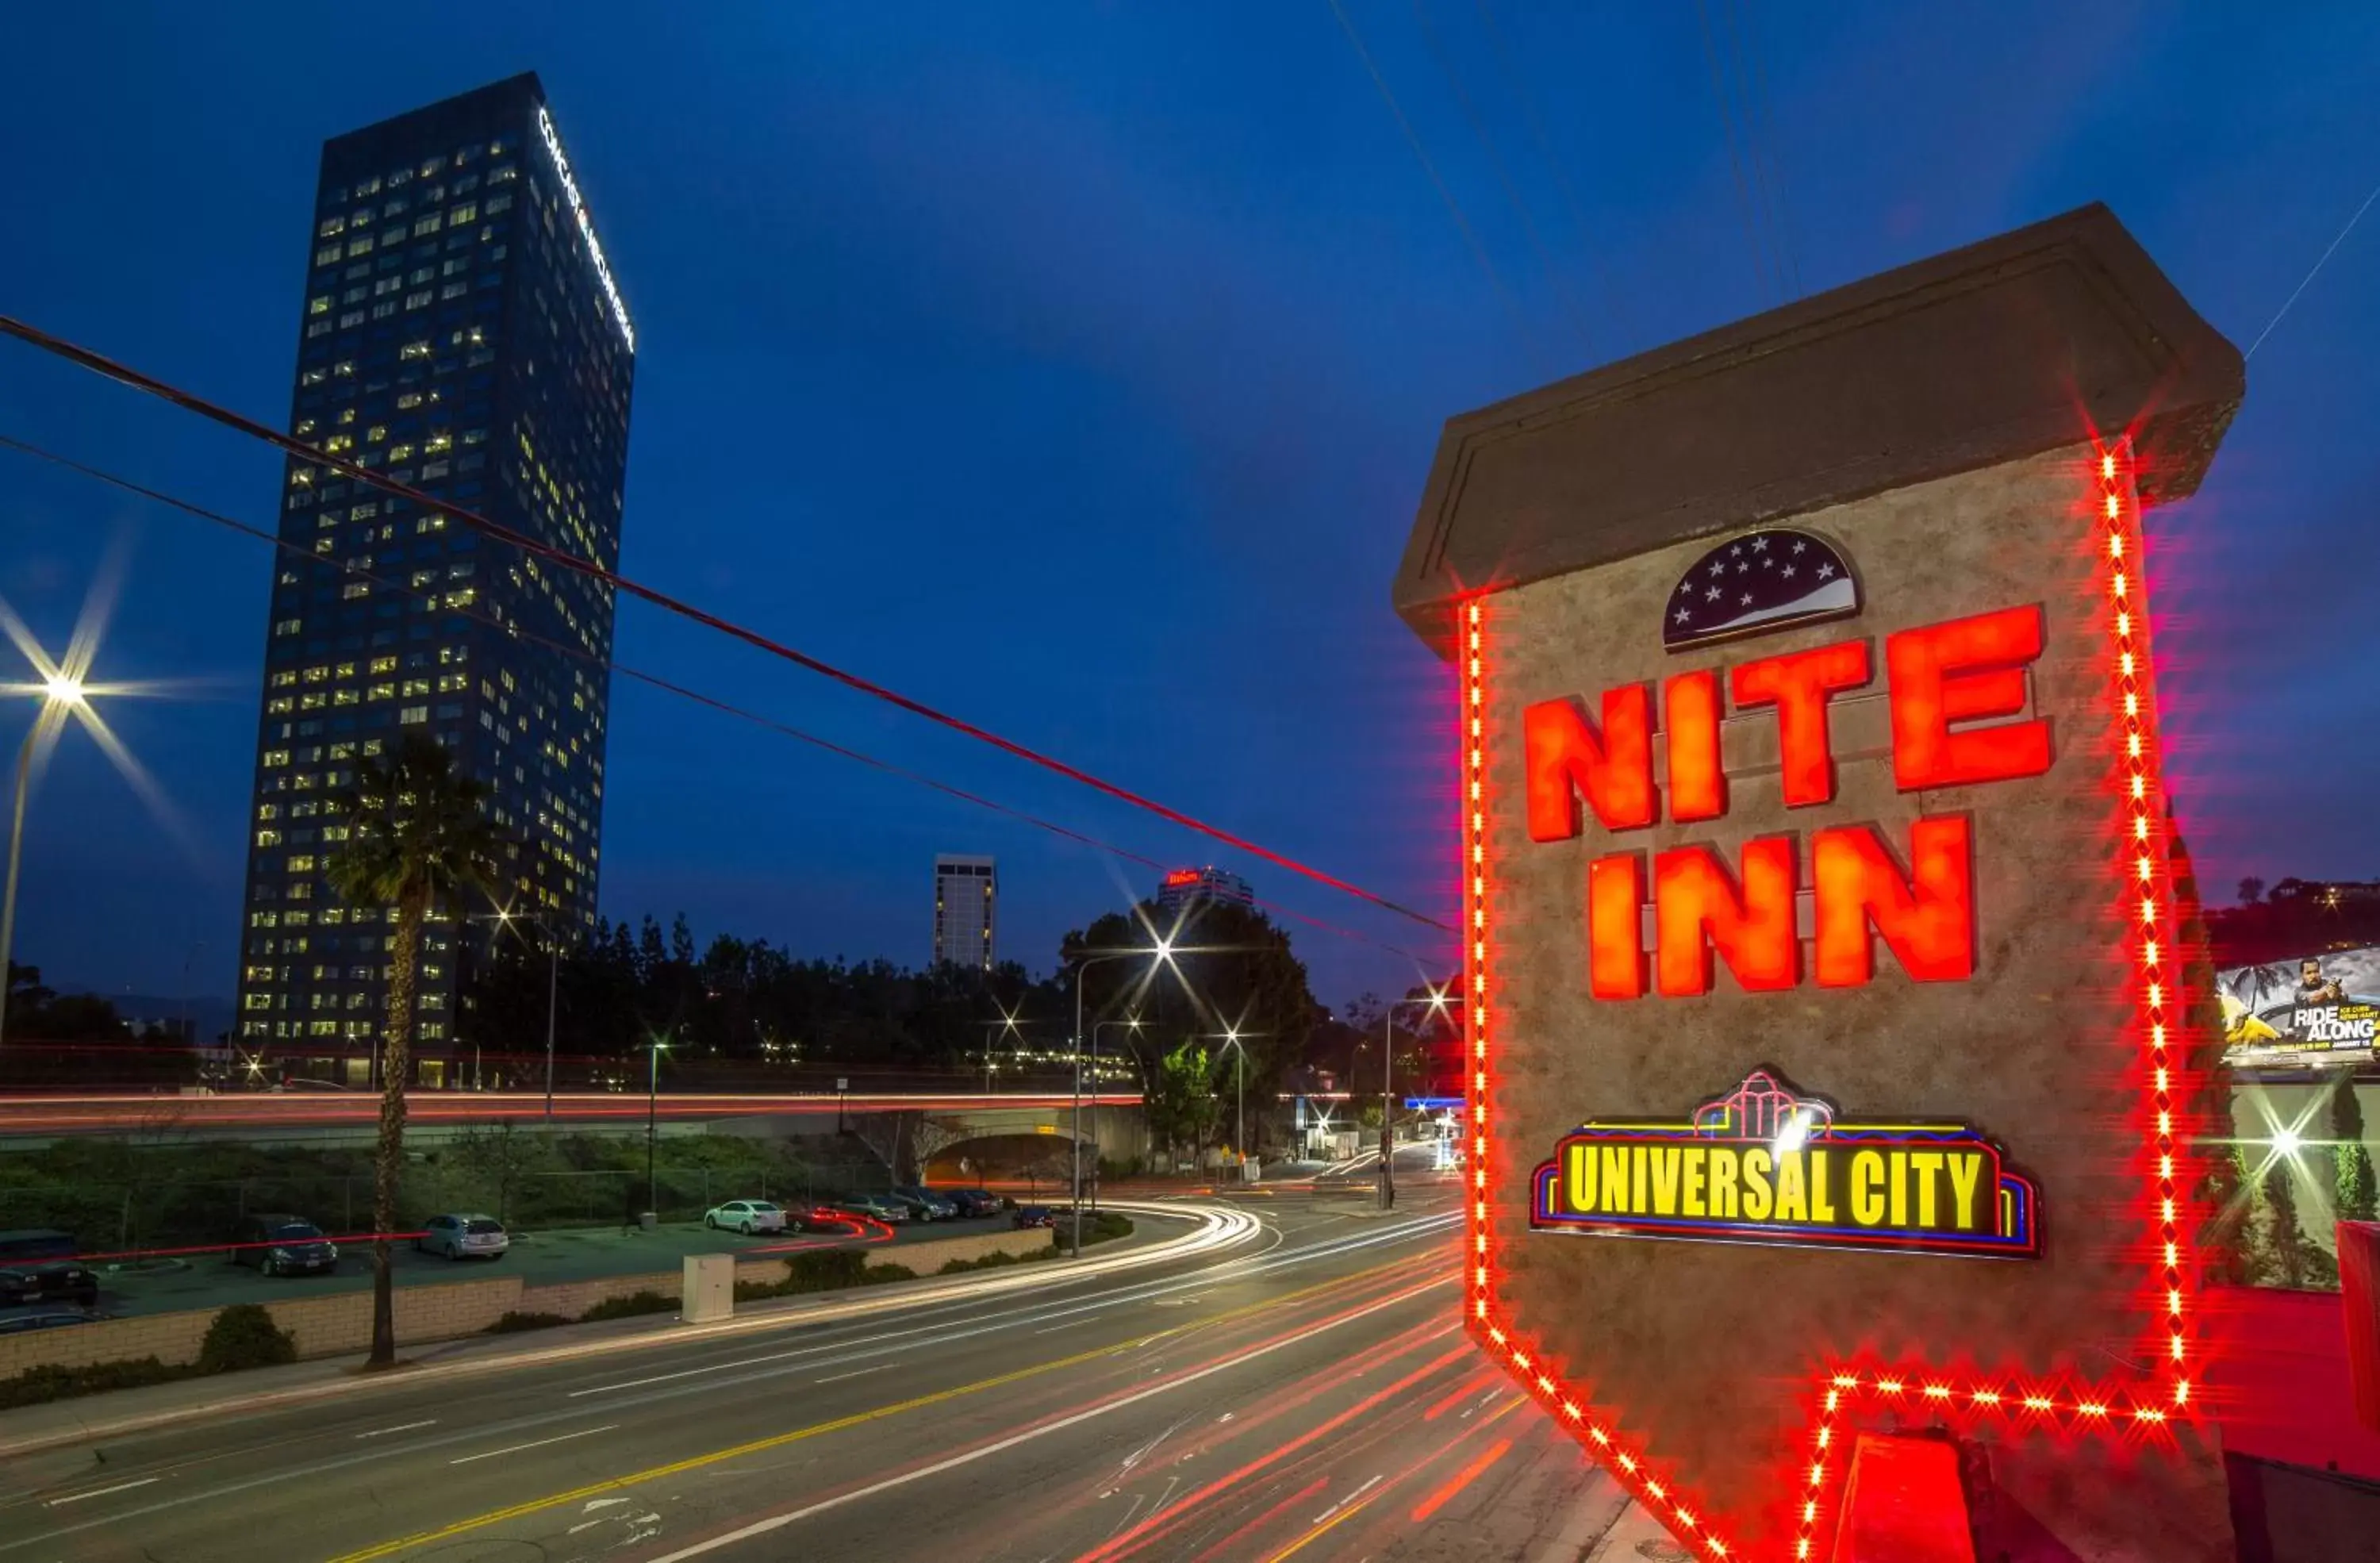 Night in Nite Inn at Universal City